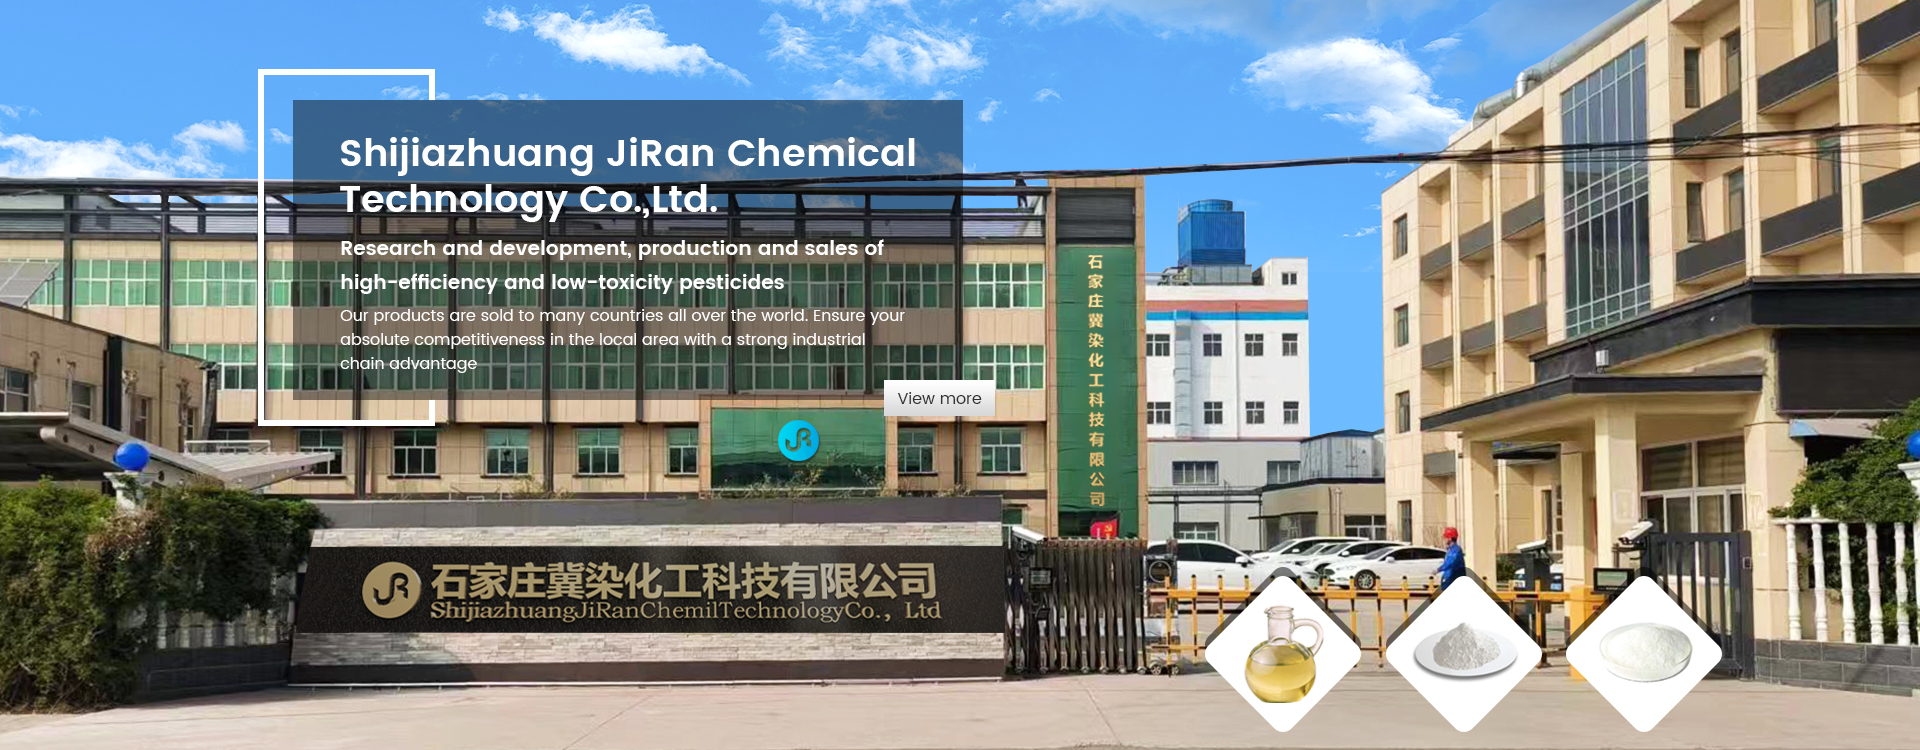 Shijiazhuang Jiran Chemical Technology Co., Ltd.